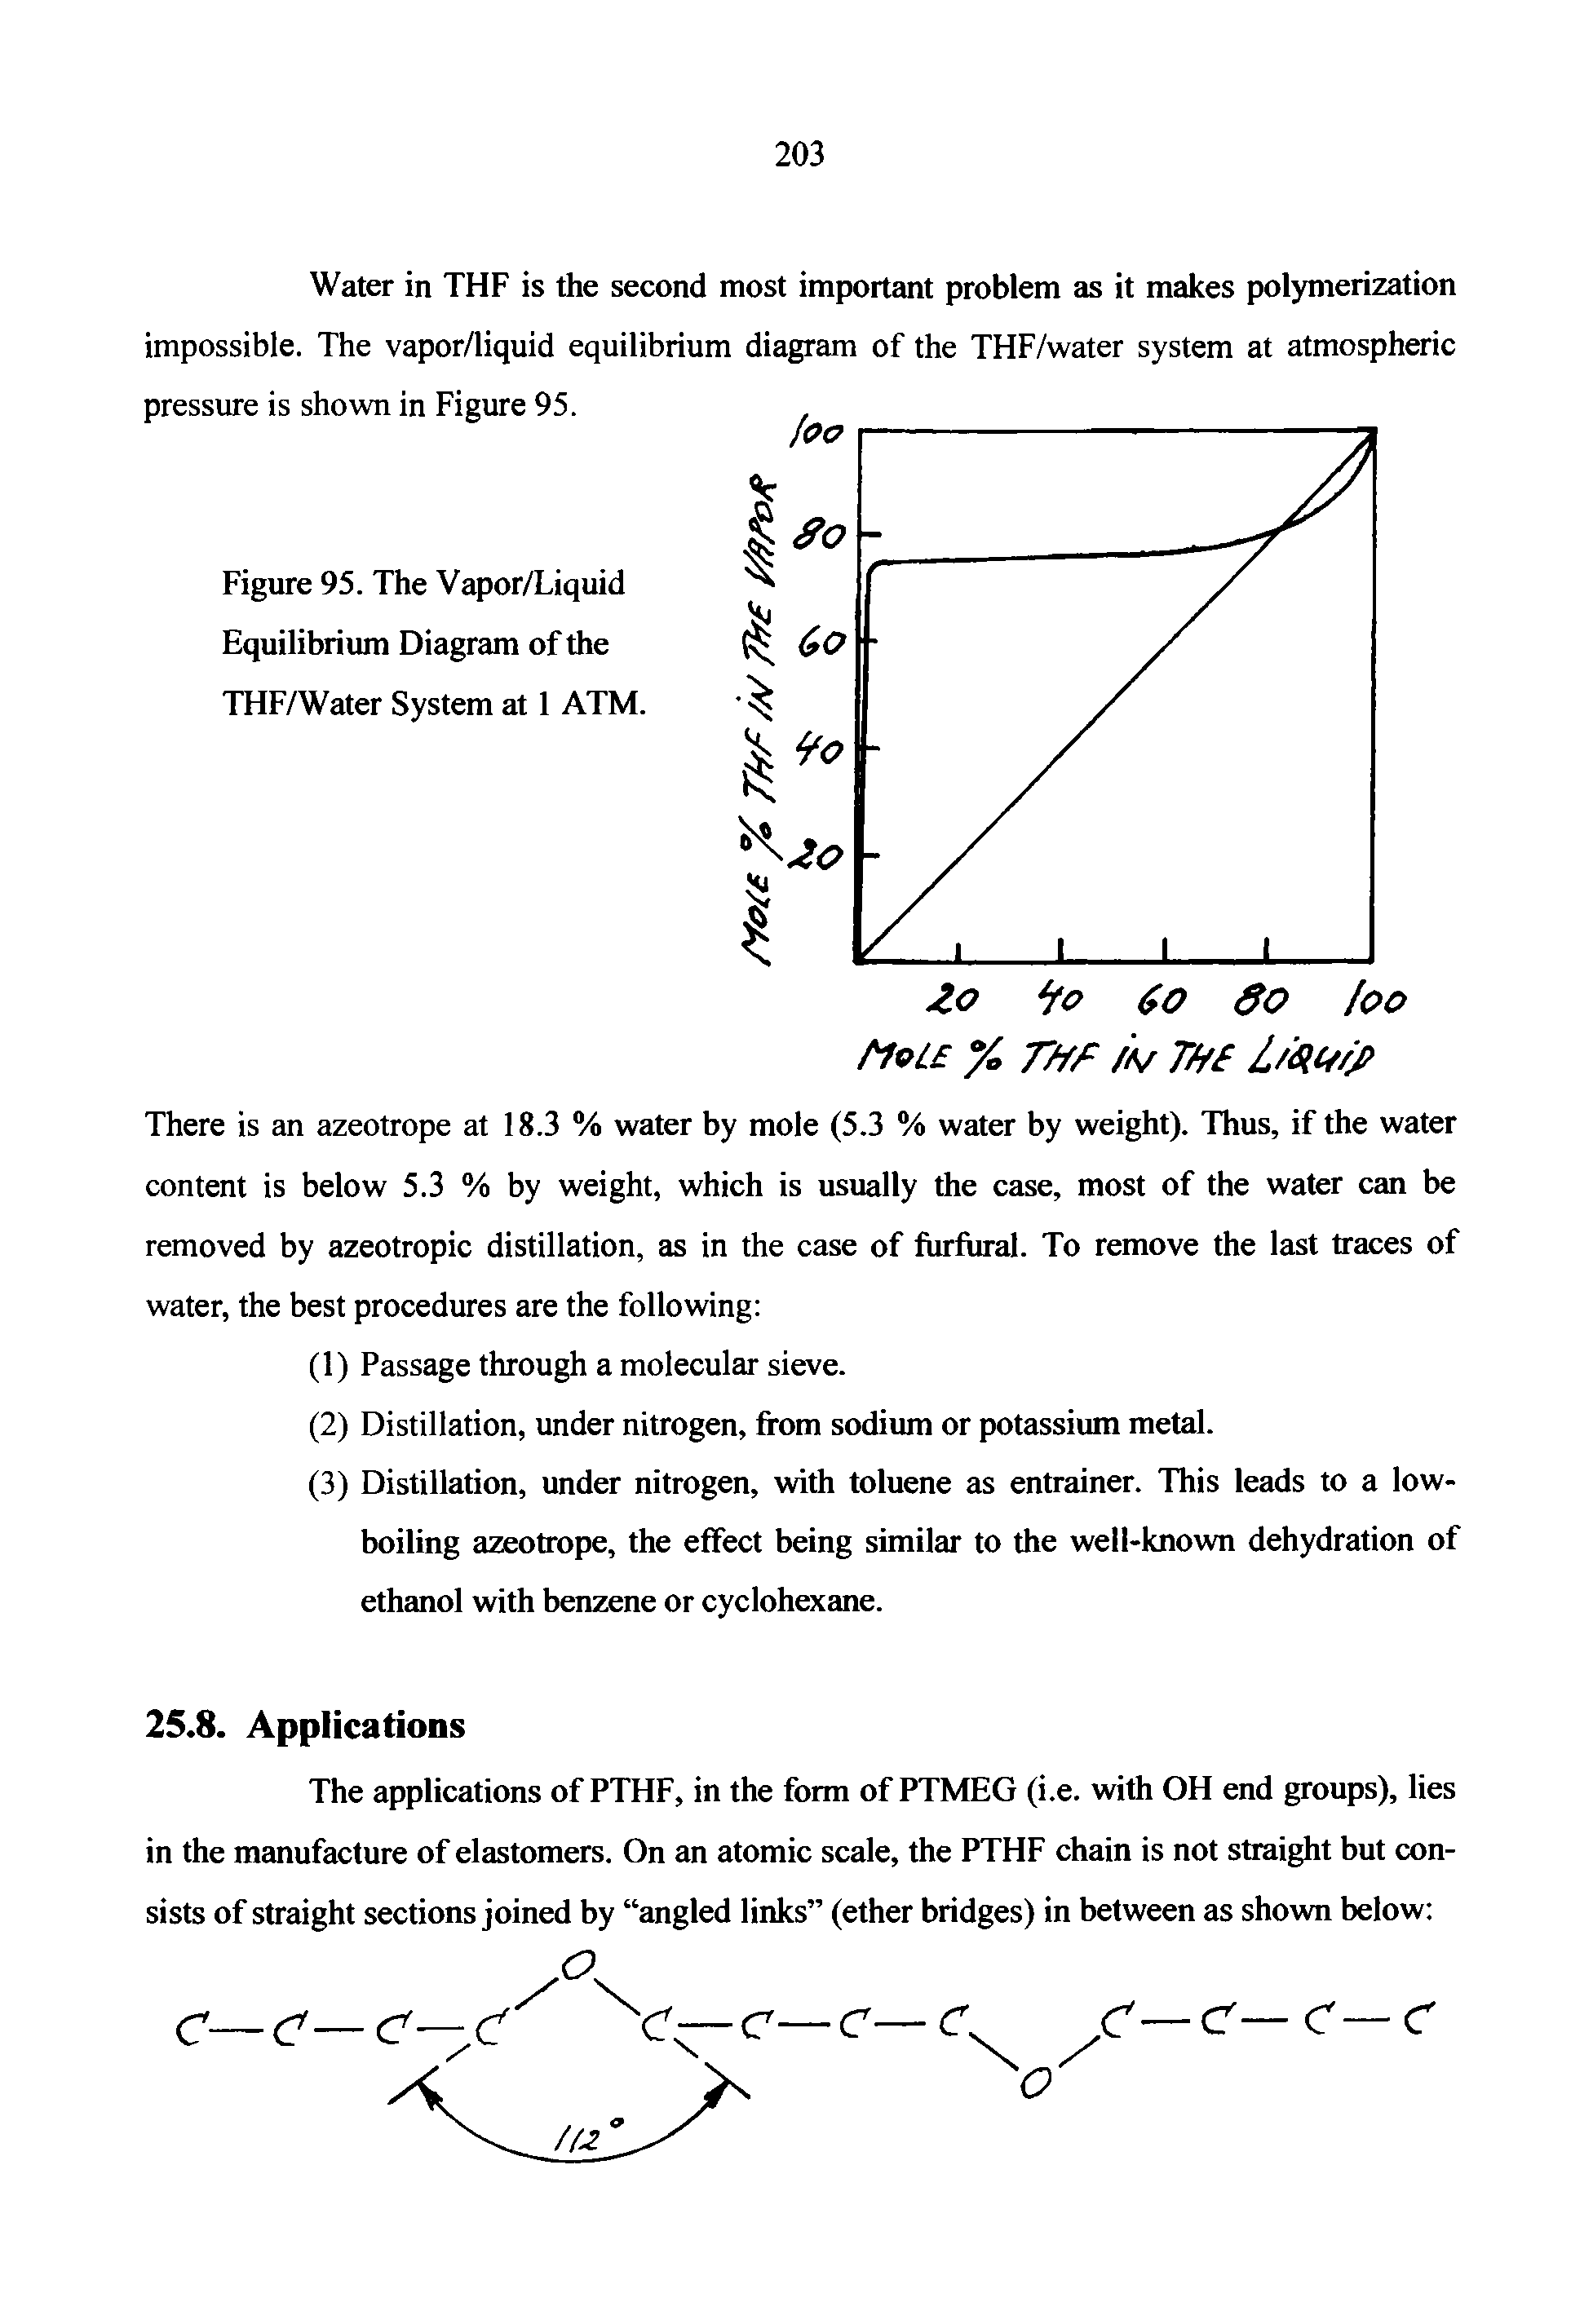 Figure 95. The Vapor/Liquid Equilibrium Diagram of the THF/Water System at 1 ATM.